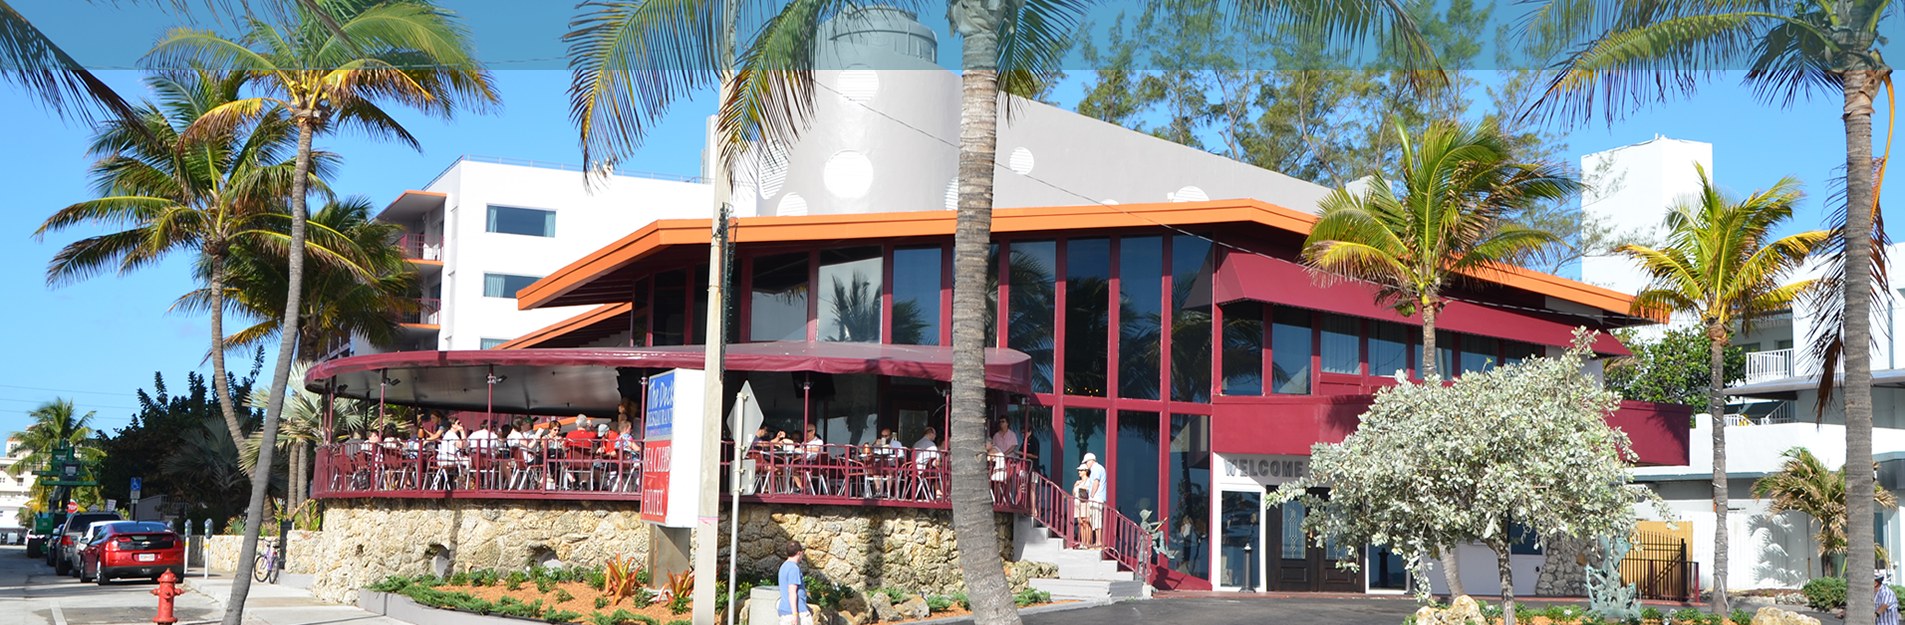 Seaclub Resort Ft Lauderdale